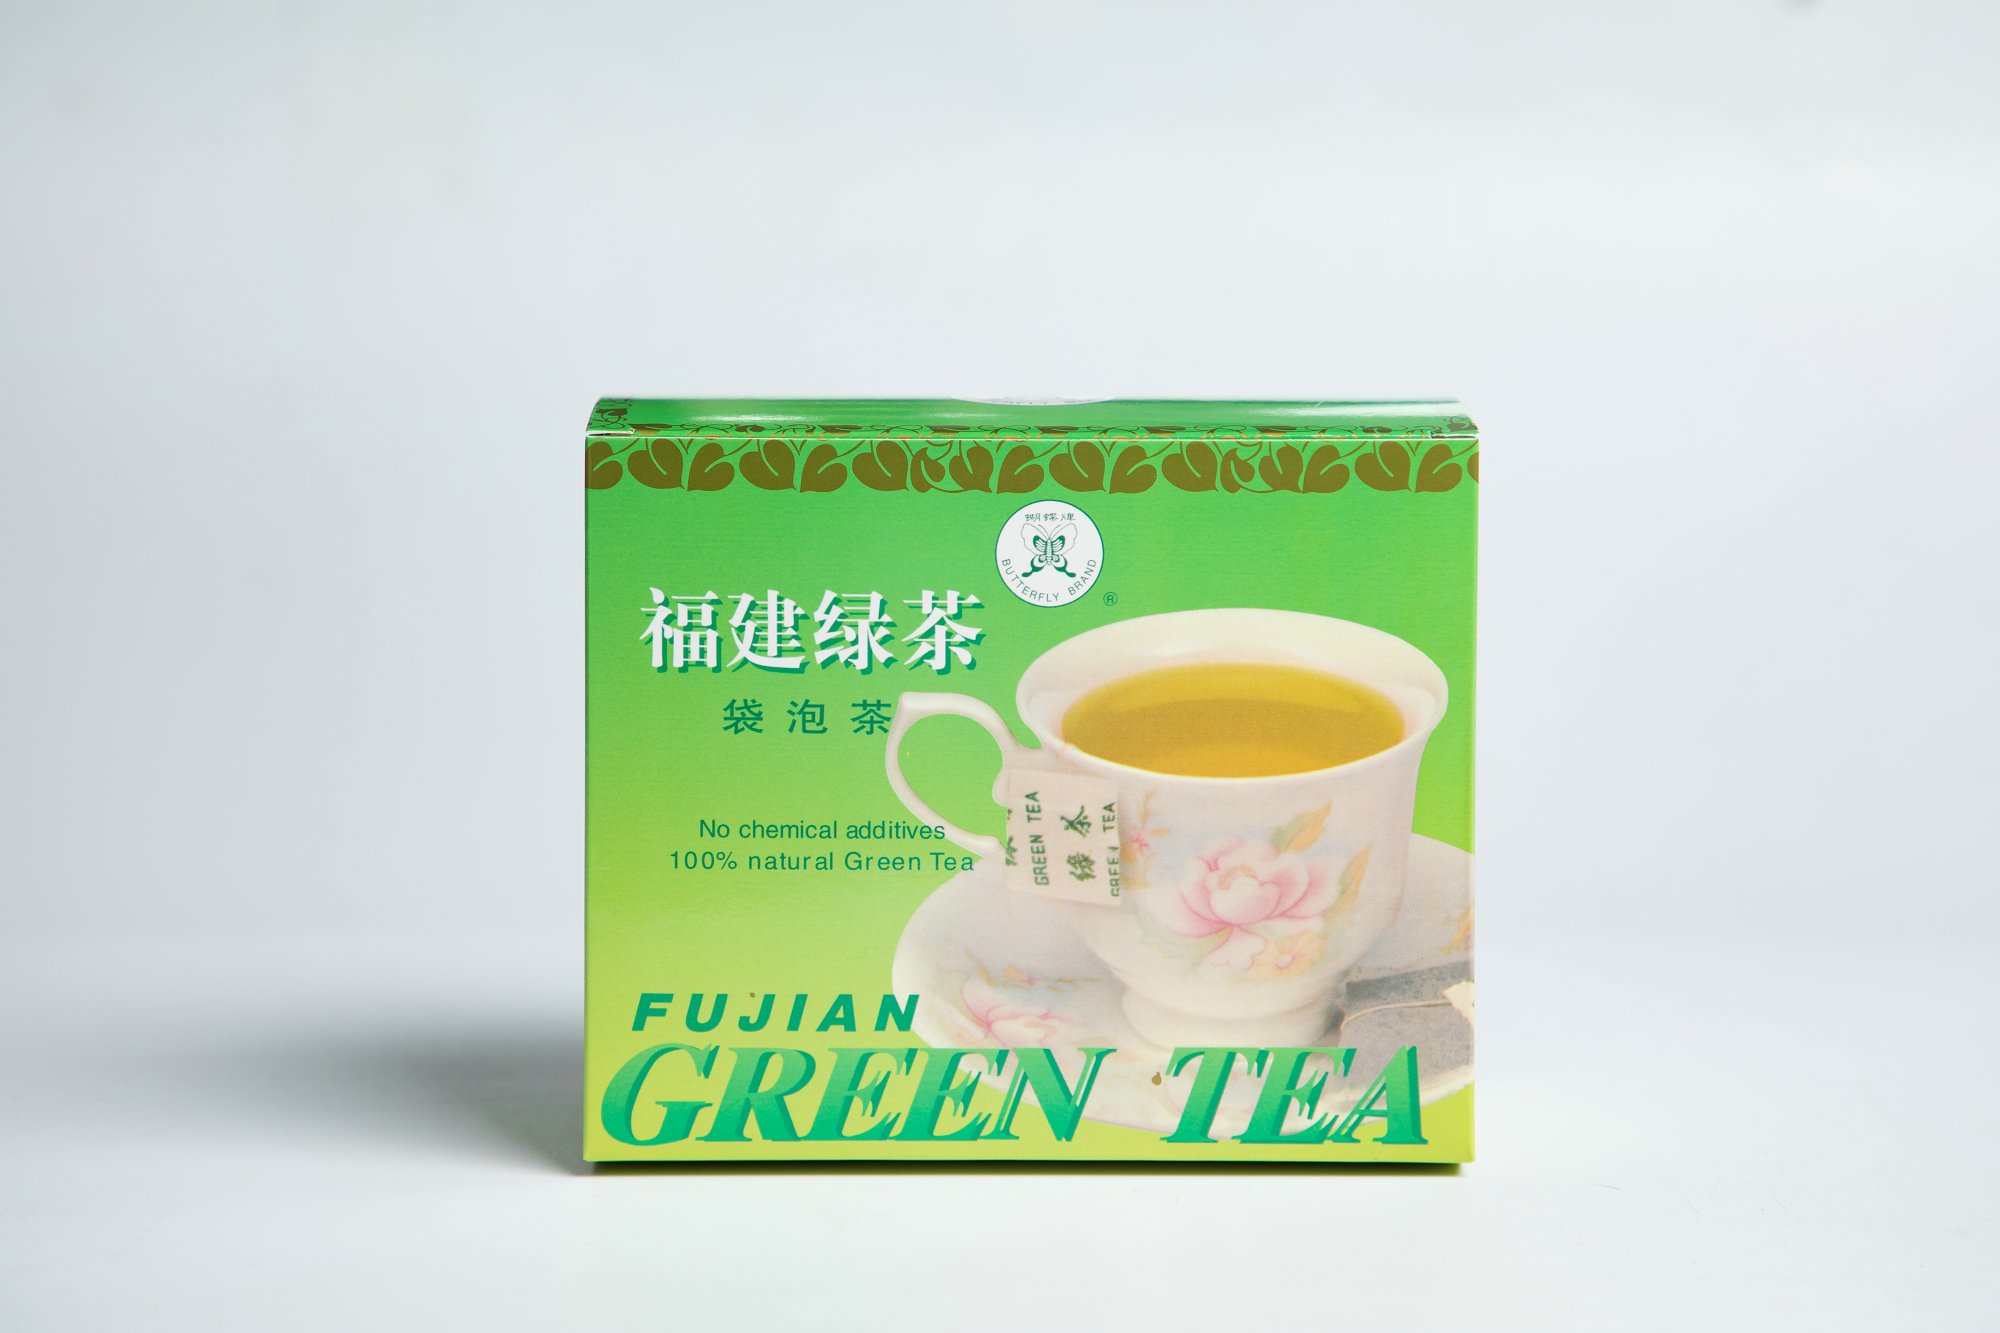 Green Tea Bag #GT704 2GX50BAGS